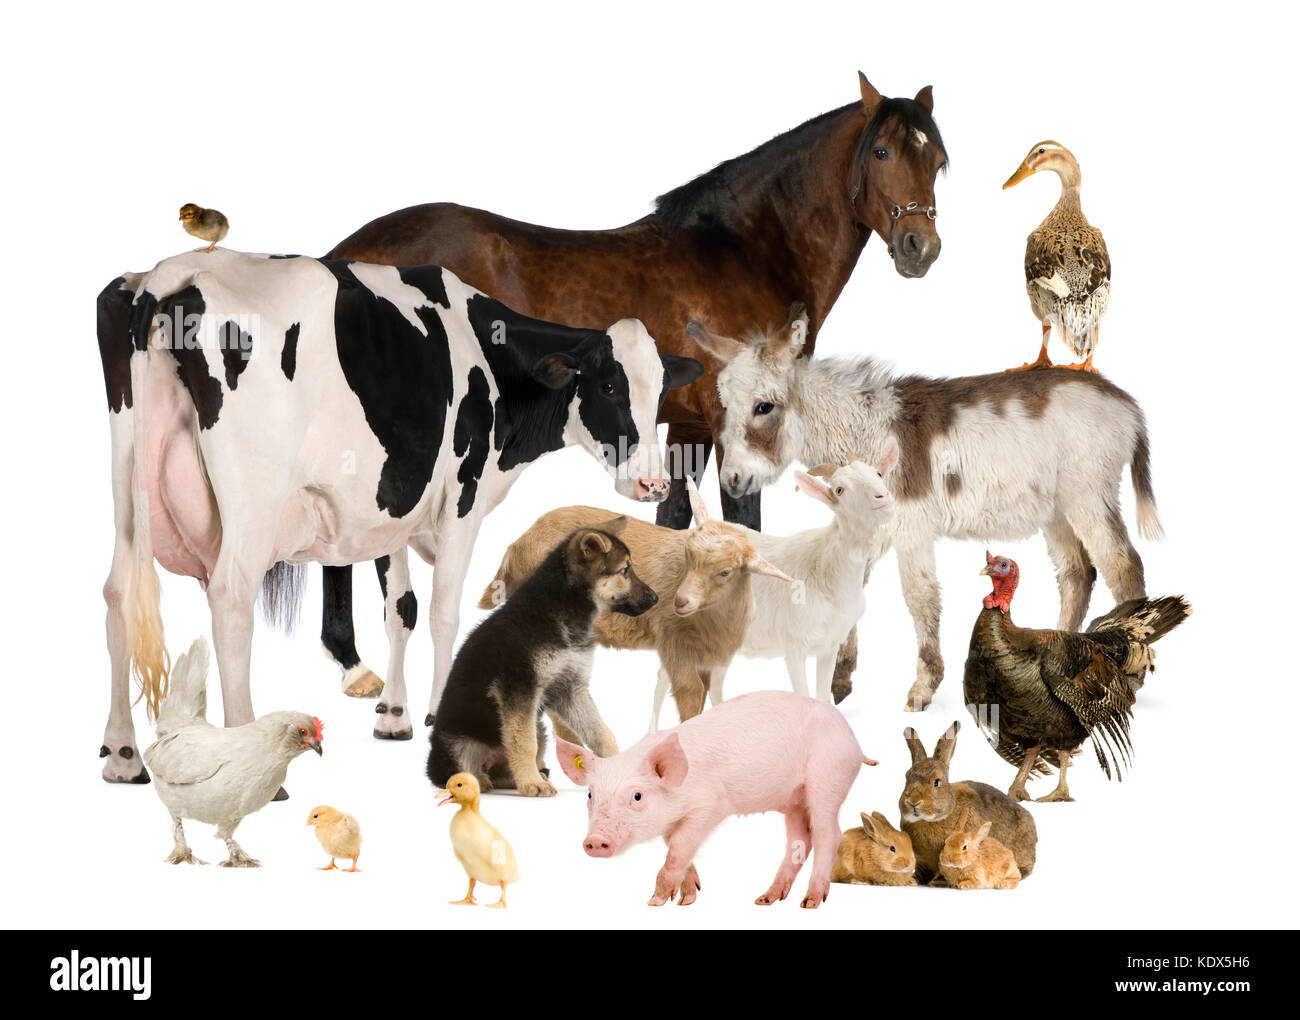 Group of Farm animals: horse, cow, pig, dog, hen, chick, rabbit, duck,  turkey, donkey Stock Photo - Alamy